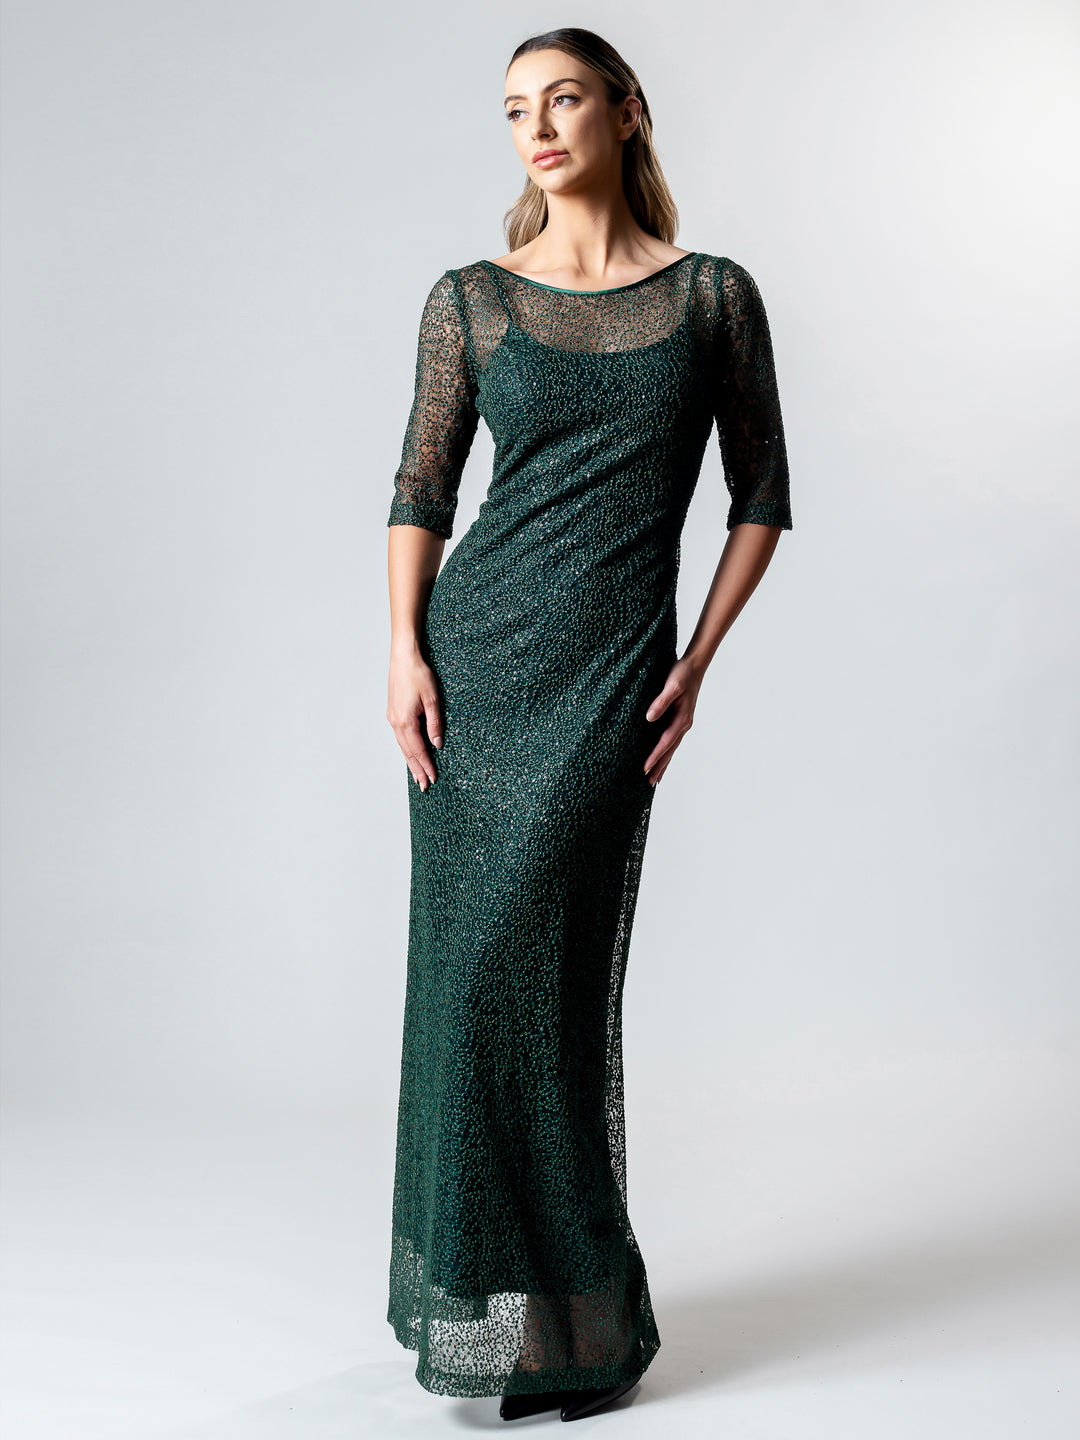 Lisa Barron - Emerald 3/4 Sleeve Evening Gown